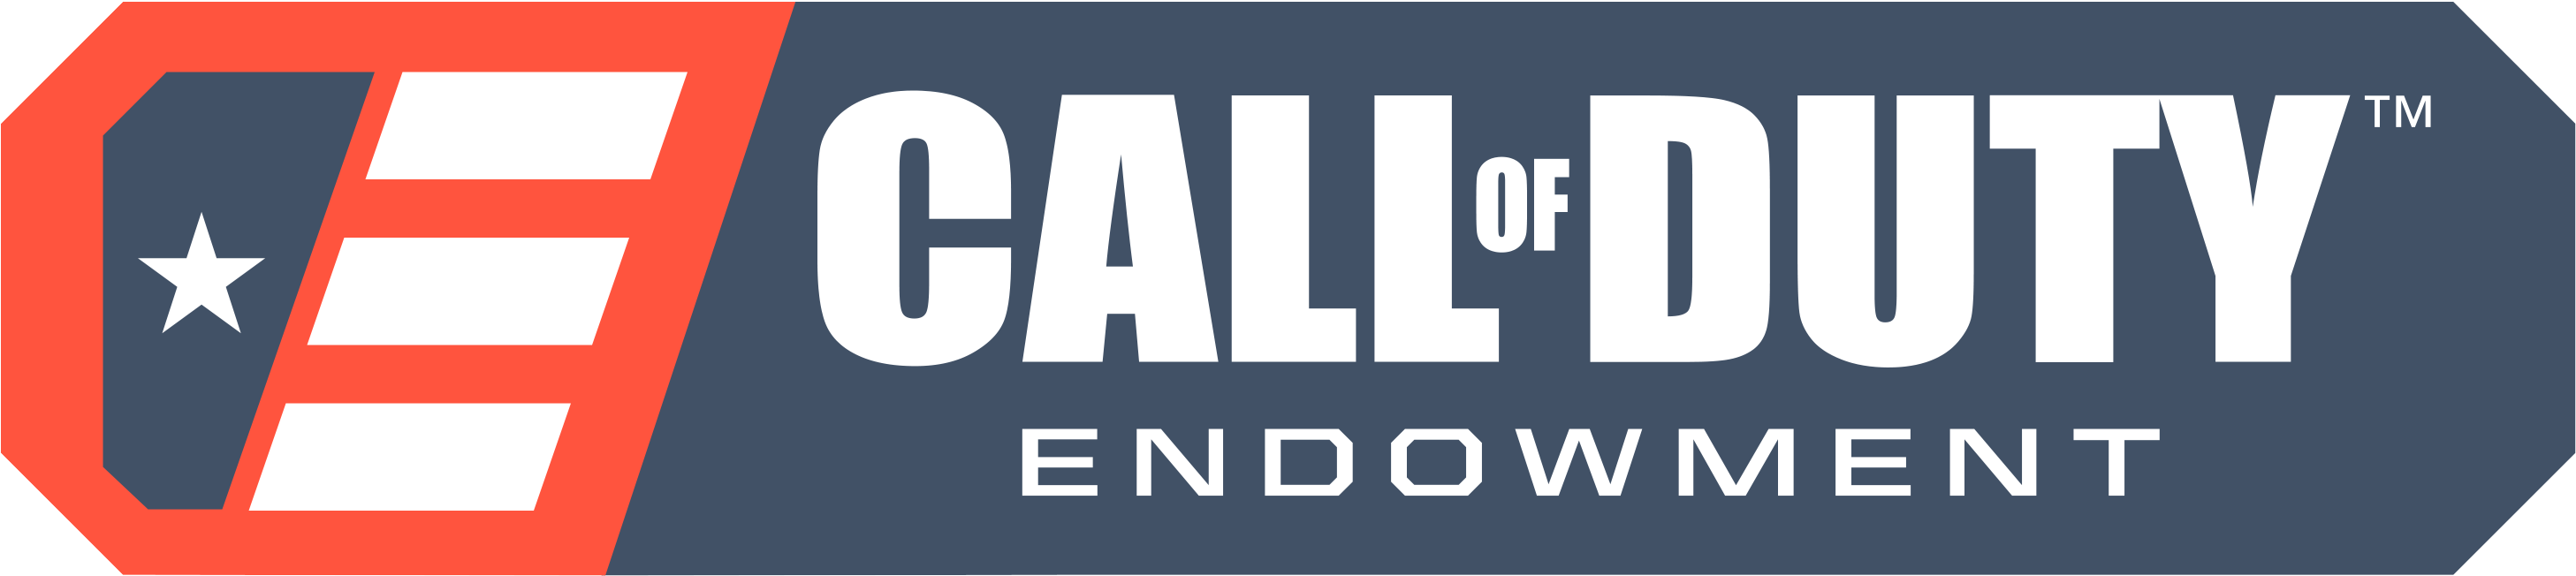 Callof Duty Endowment Logo PNG